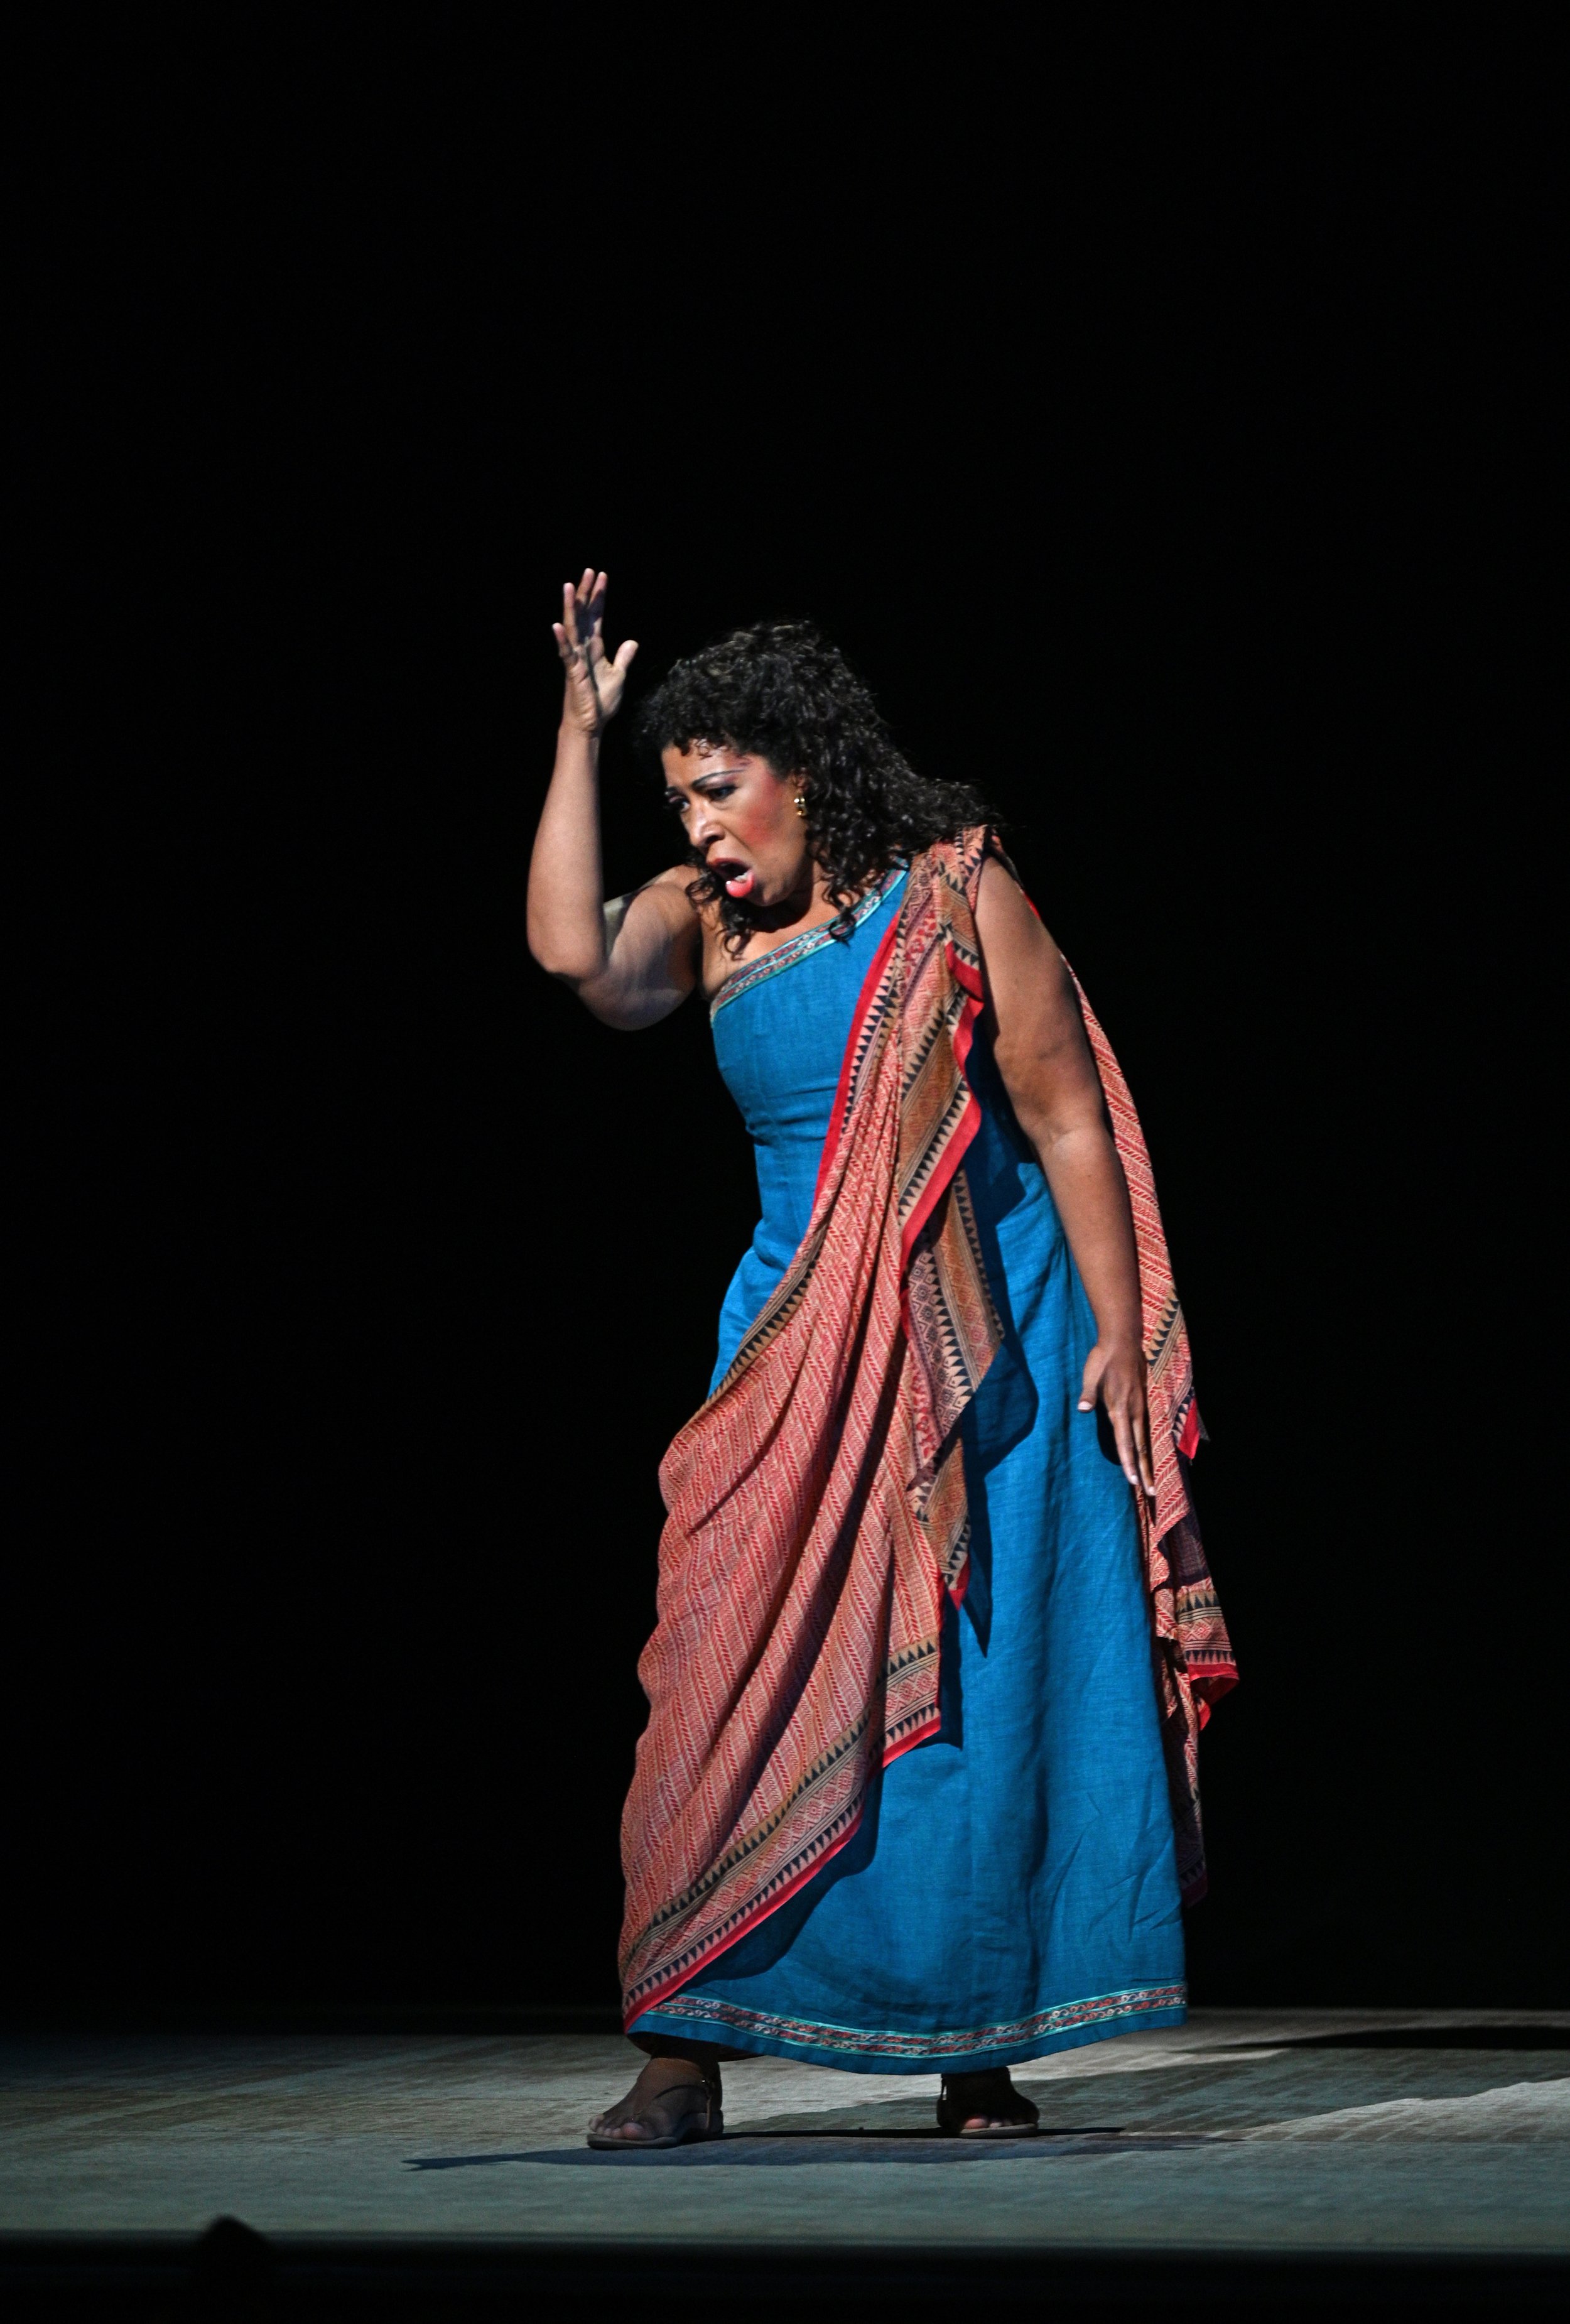  Mary Elizabeth Williams as Aida. Photo by Philip Groshong. 